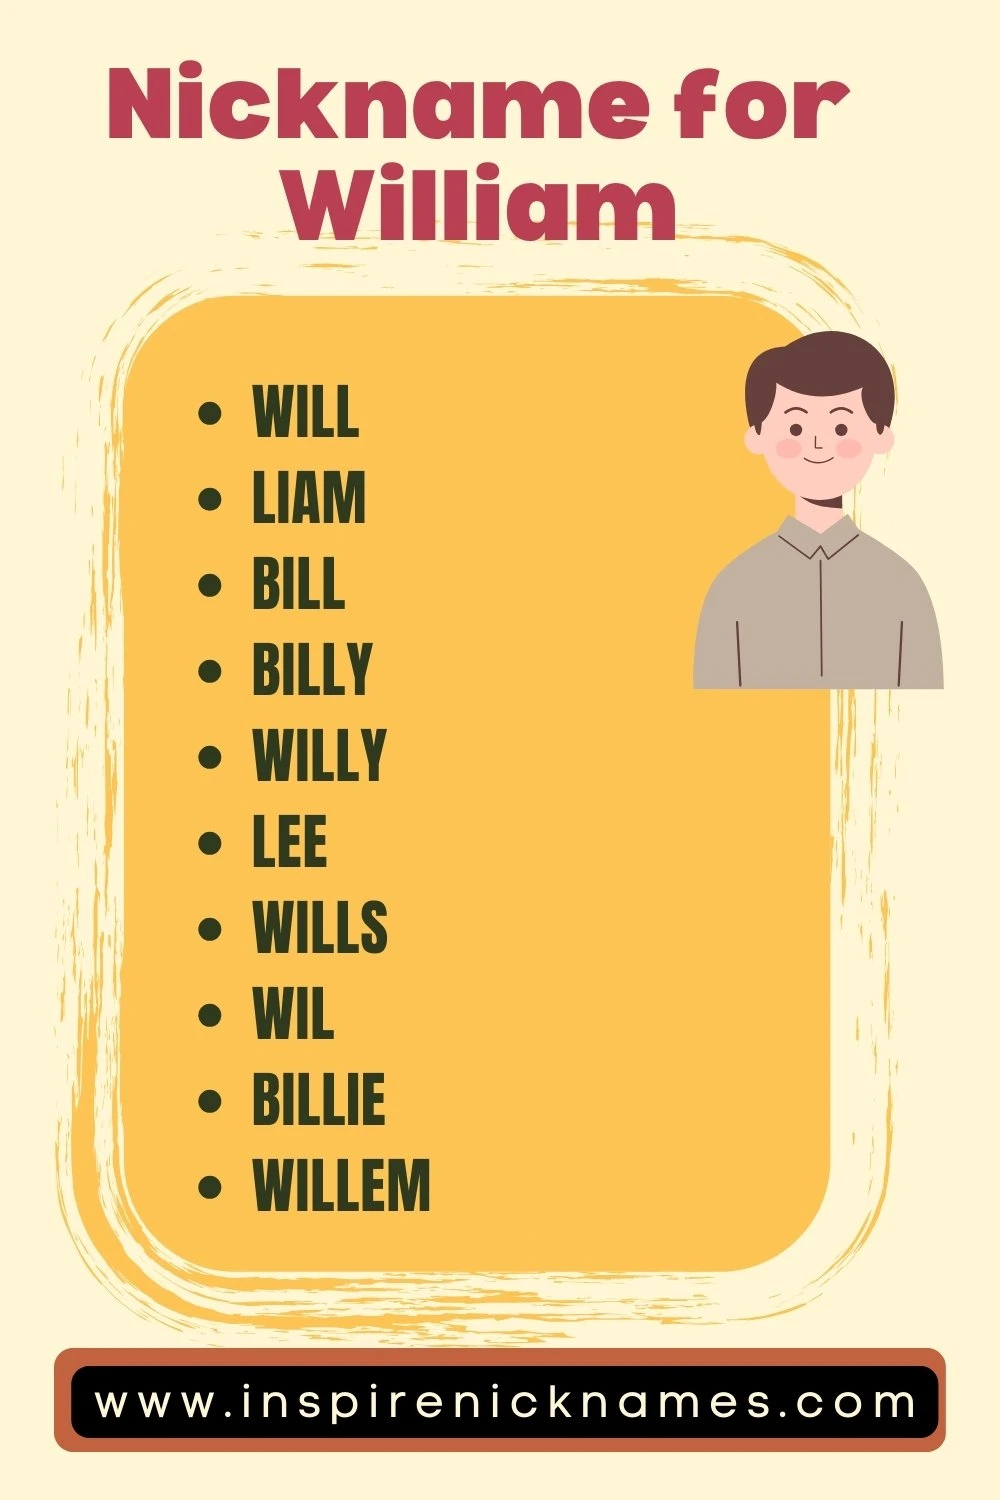 Nickname for William